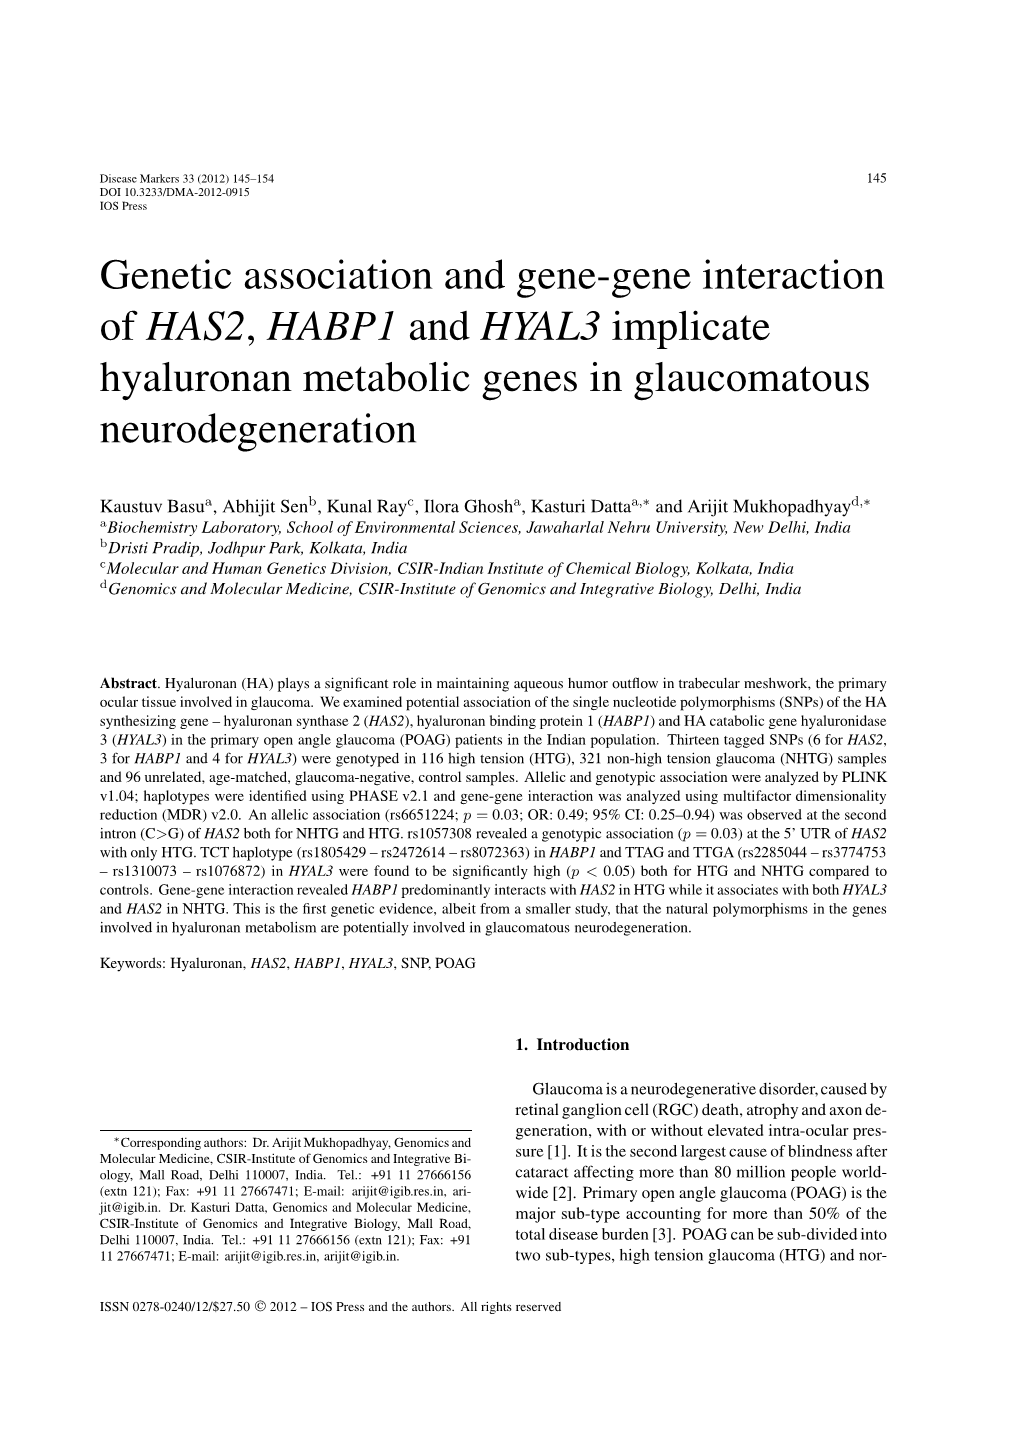 Genetic Association and Gene-Gene Interaction of HAS2, HABP1 and HYAL3 Implicate Hyaluronan Metabolic Genes in Glaucomatous Neurodegeneration